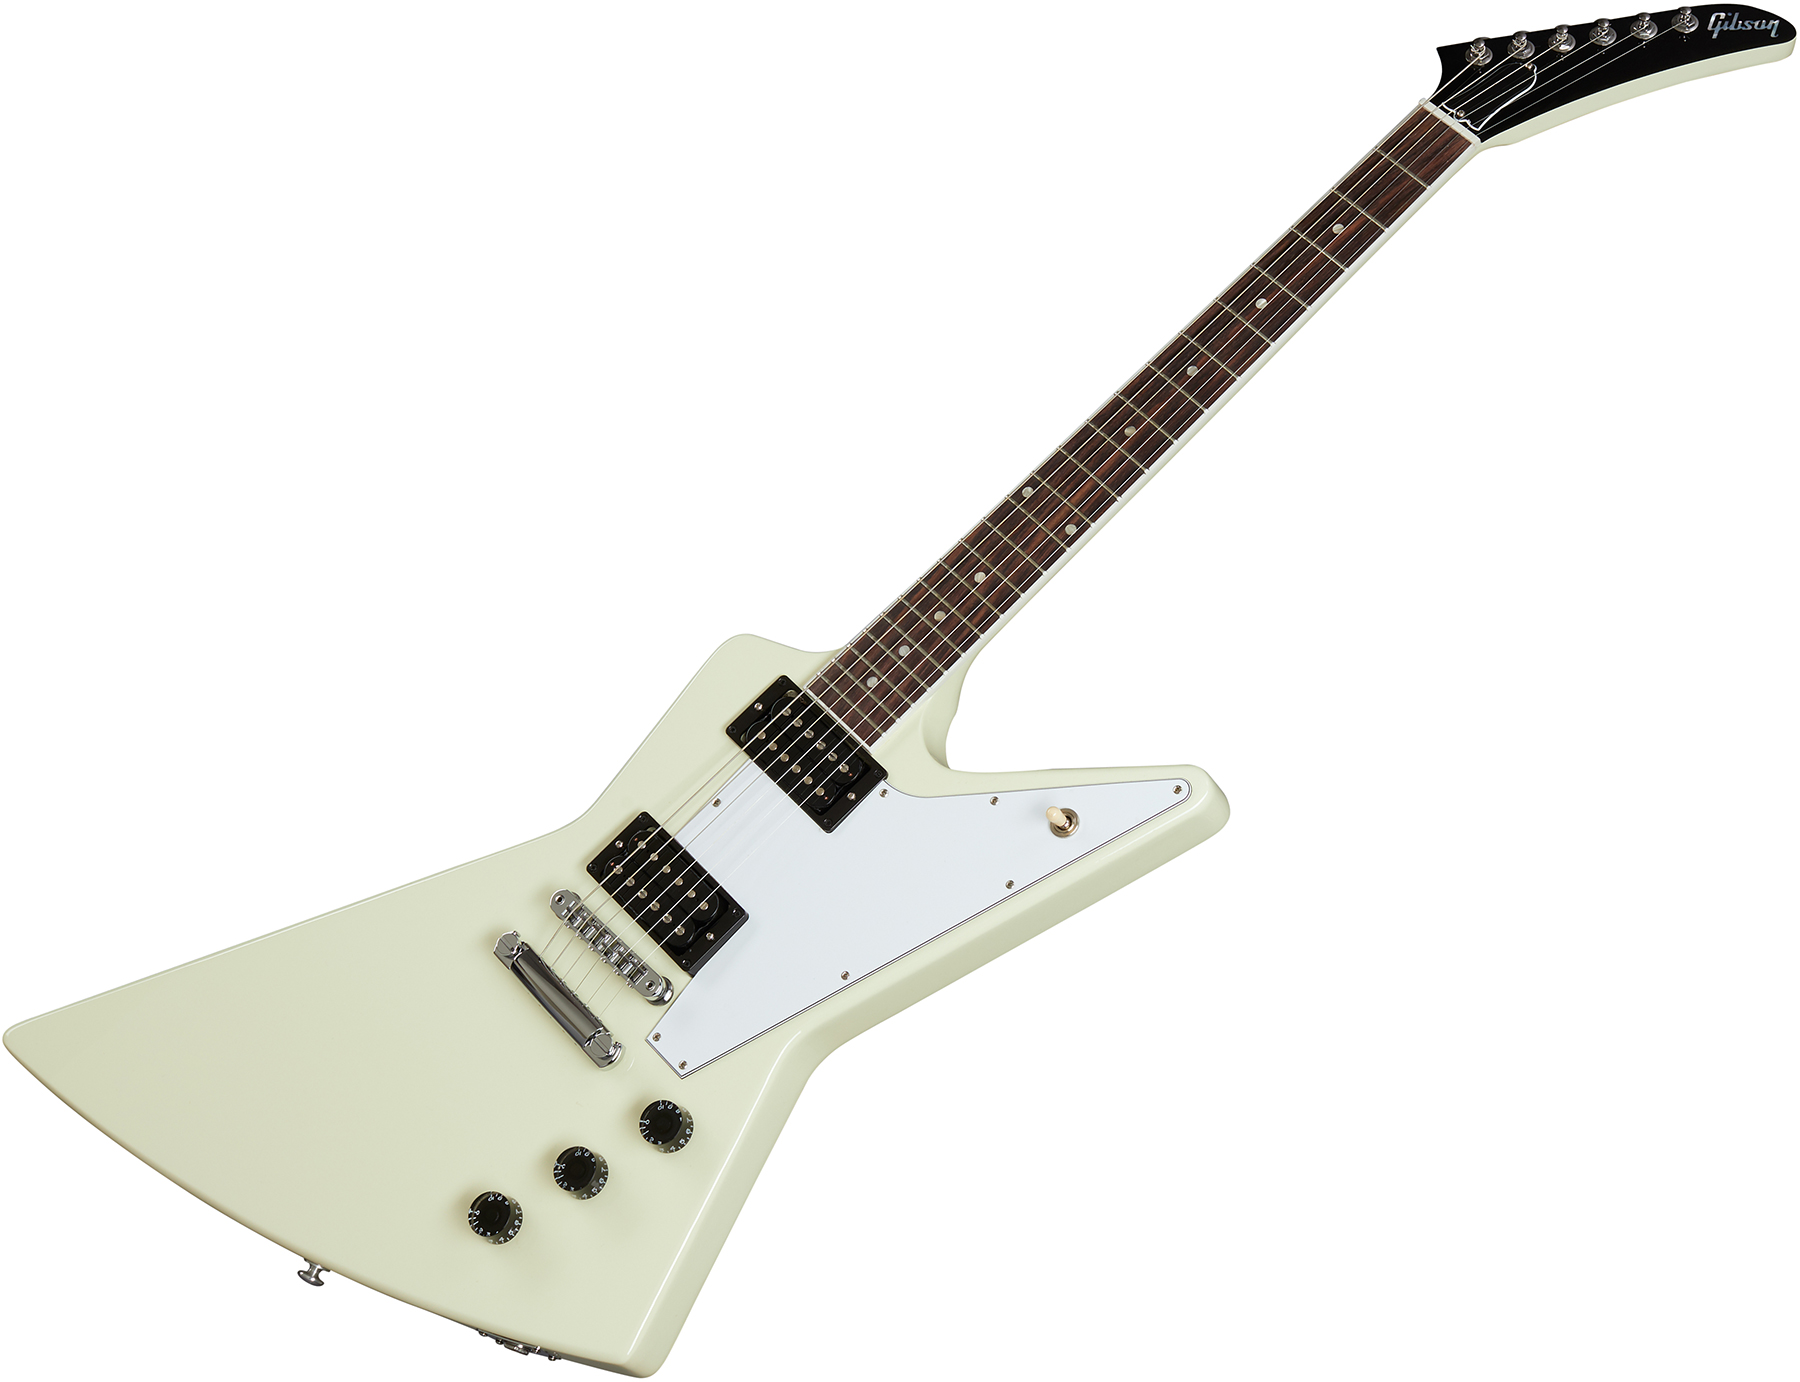 Explorer гитара. Gibson Explorer белый. Гитара Gibson Explorer. Epiphone Explorer 1984. Гитара электро Гибсон оригинал.